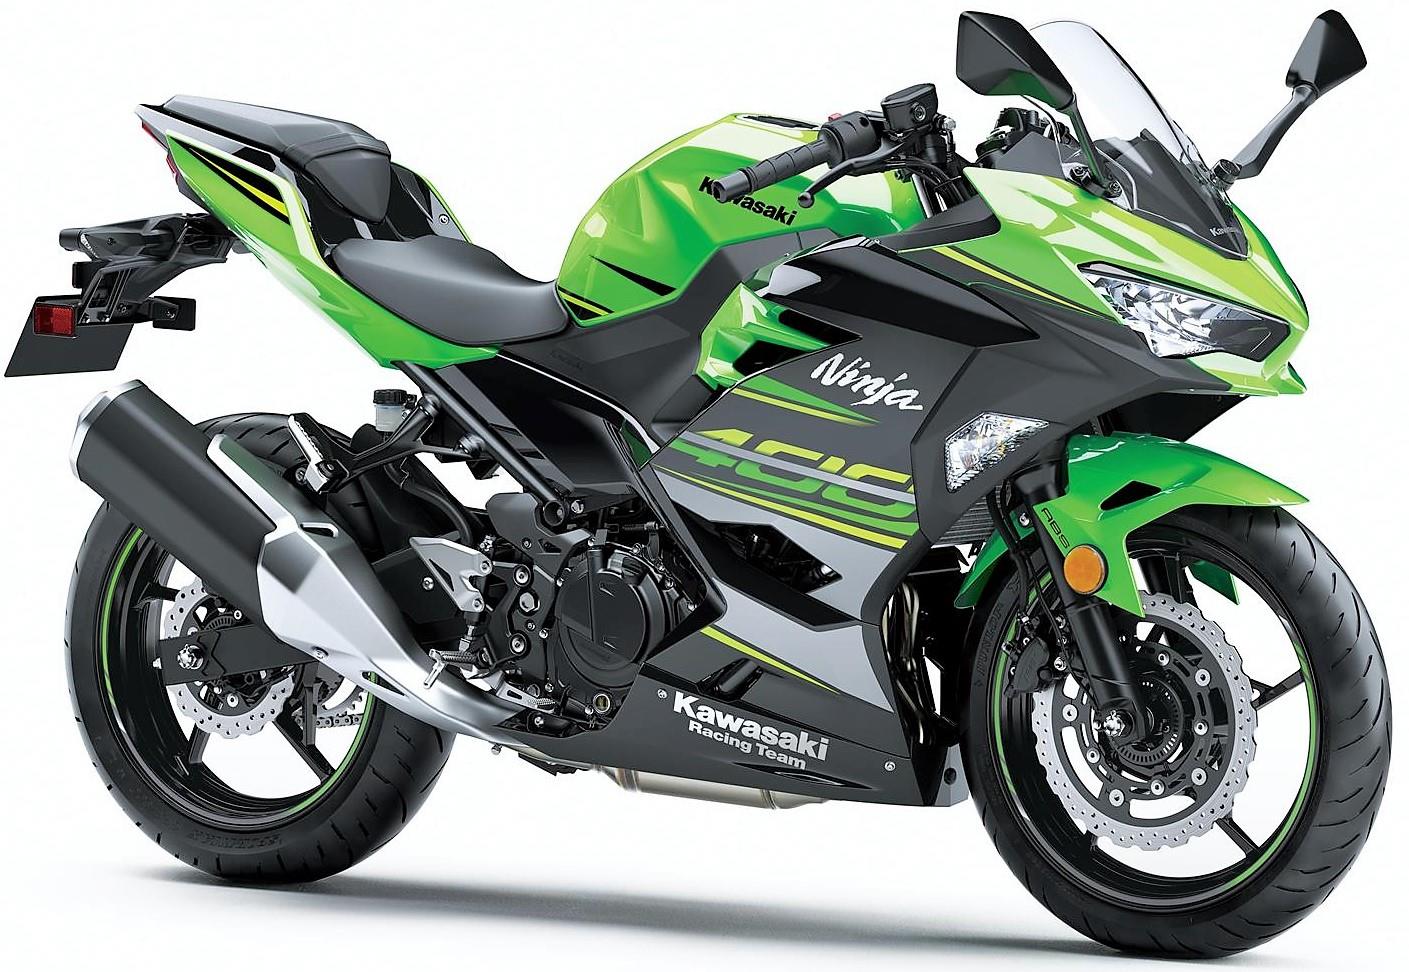 Kawasaki Ninja 400 Price Increased